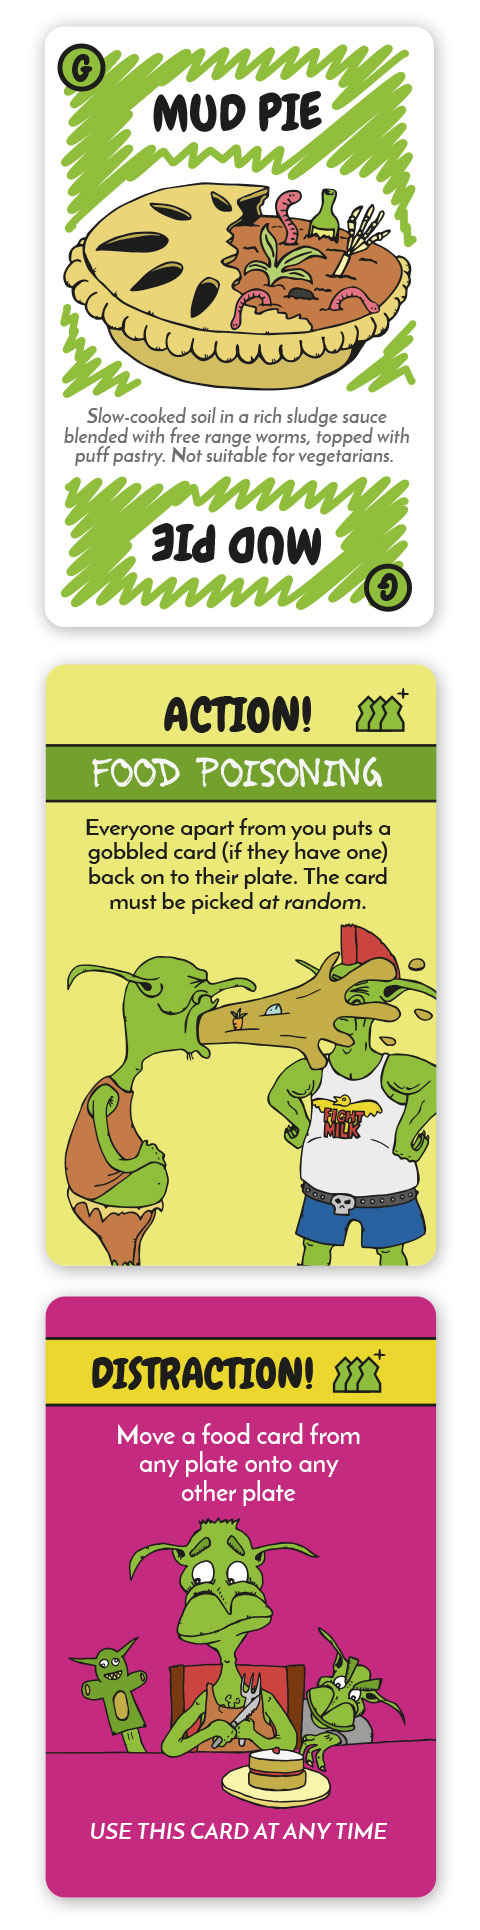 Gobblin' Goblins example cards